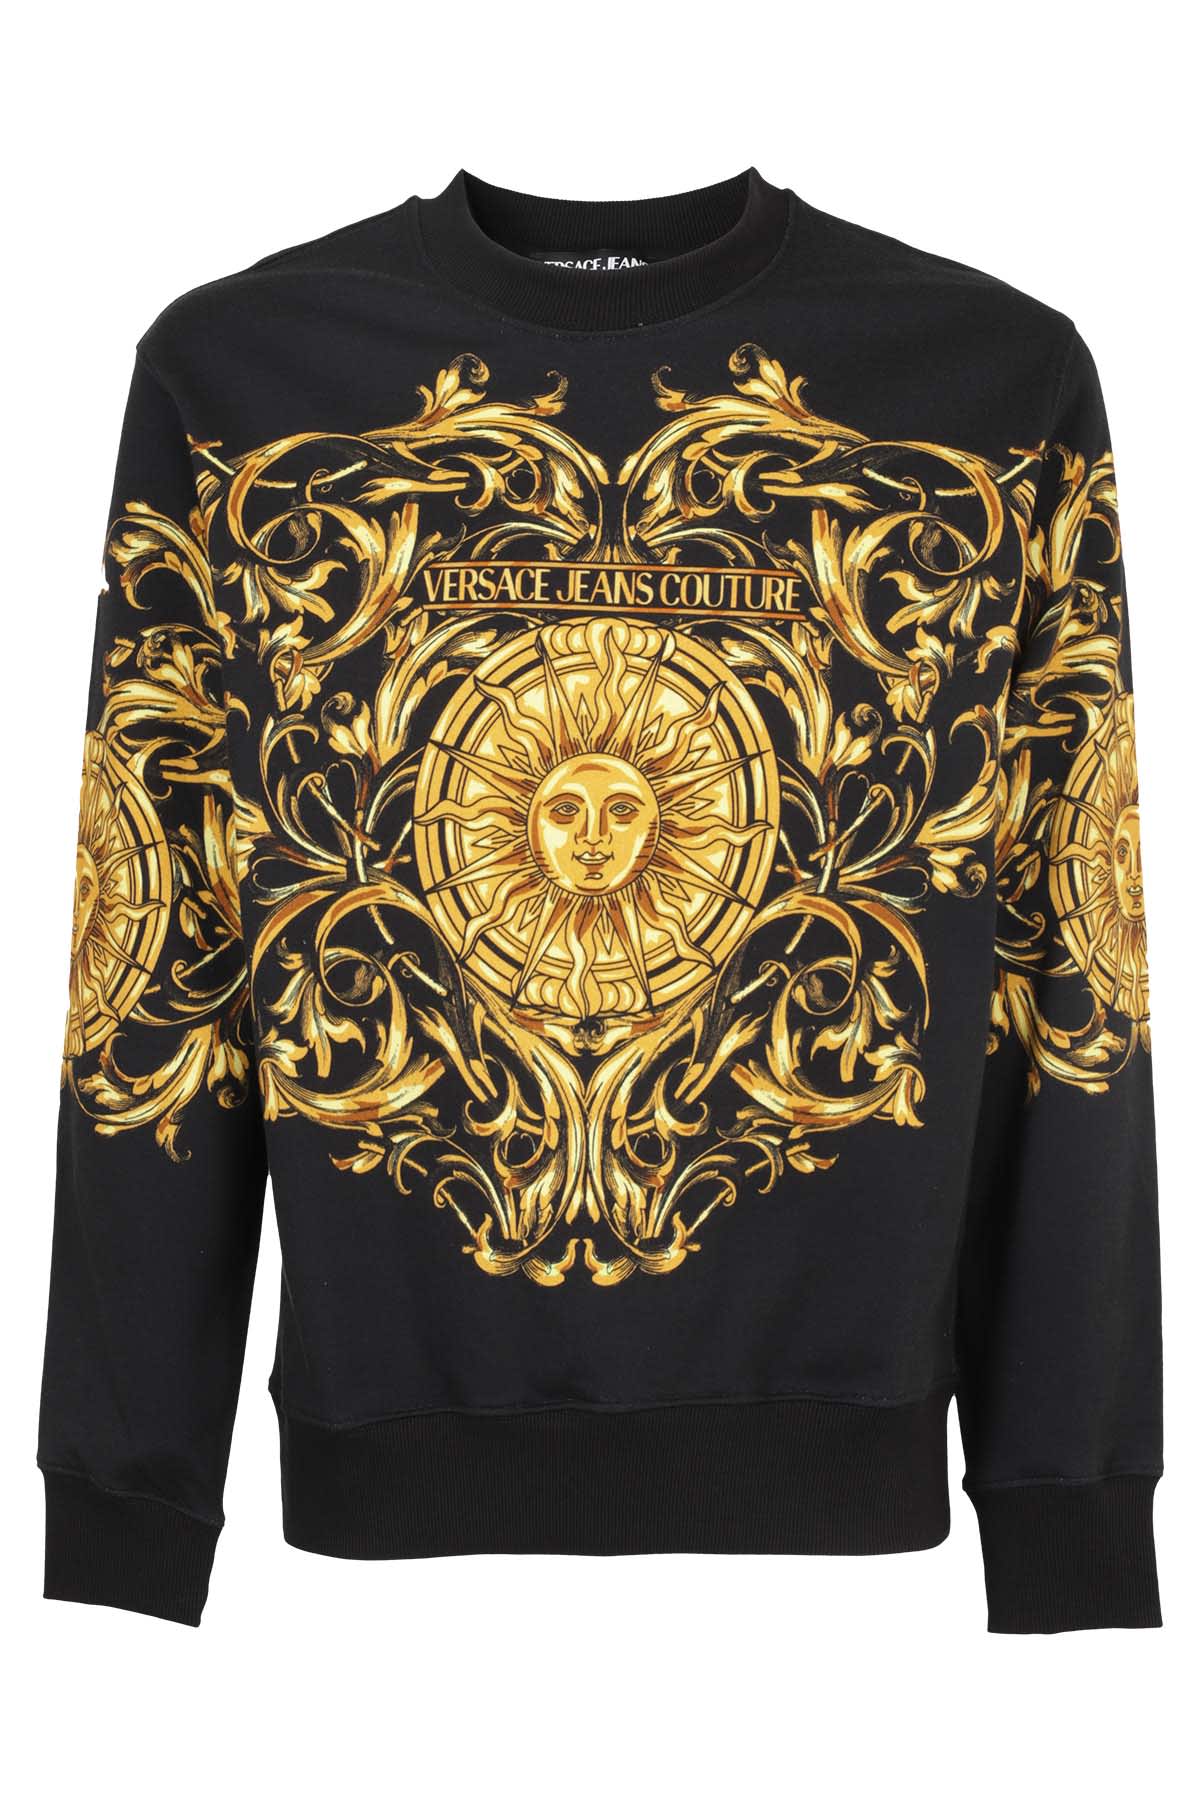 Versace Jeans Couture Sweatshirt Panel Print Baroque